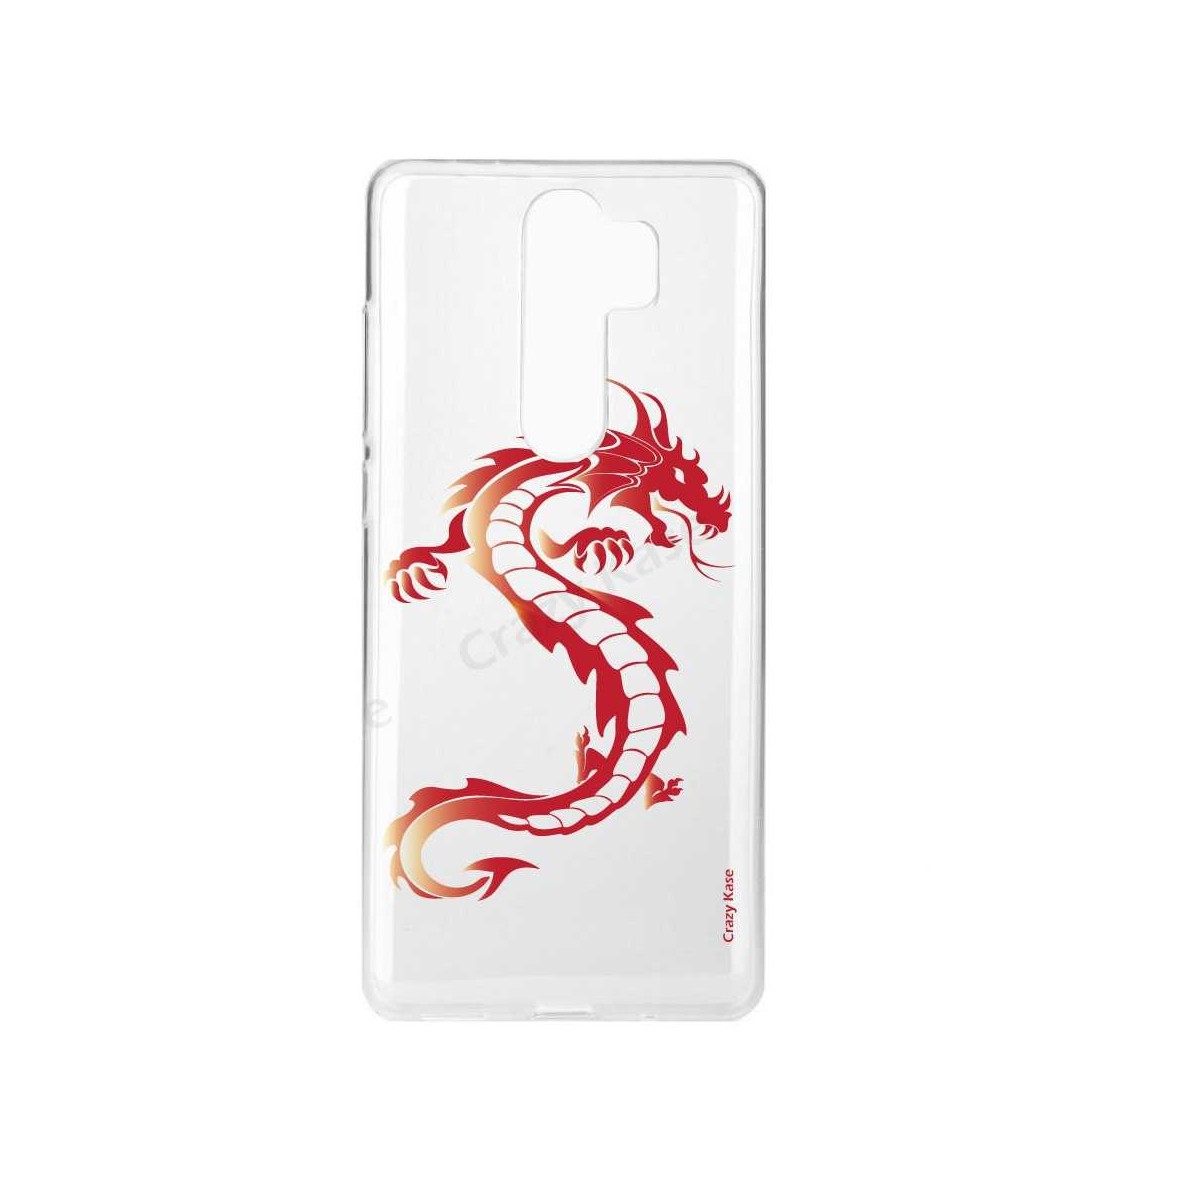 Coque Xiaomi Redmi Note 8 Pro souple Dragon rouge - Crazy Kase